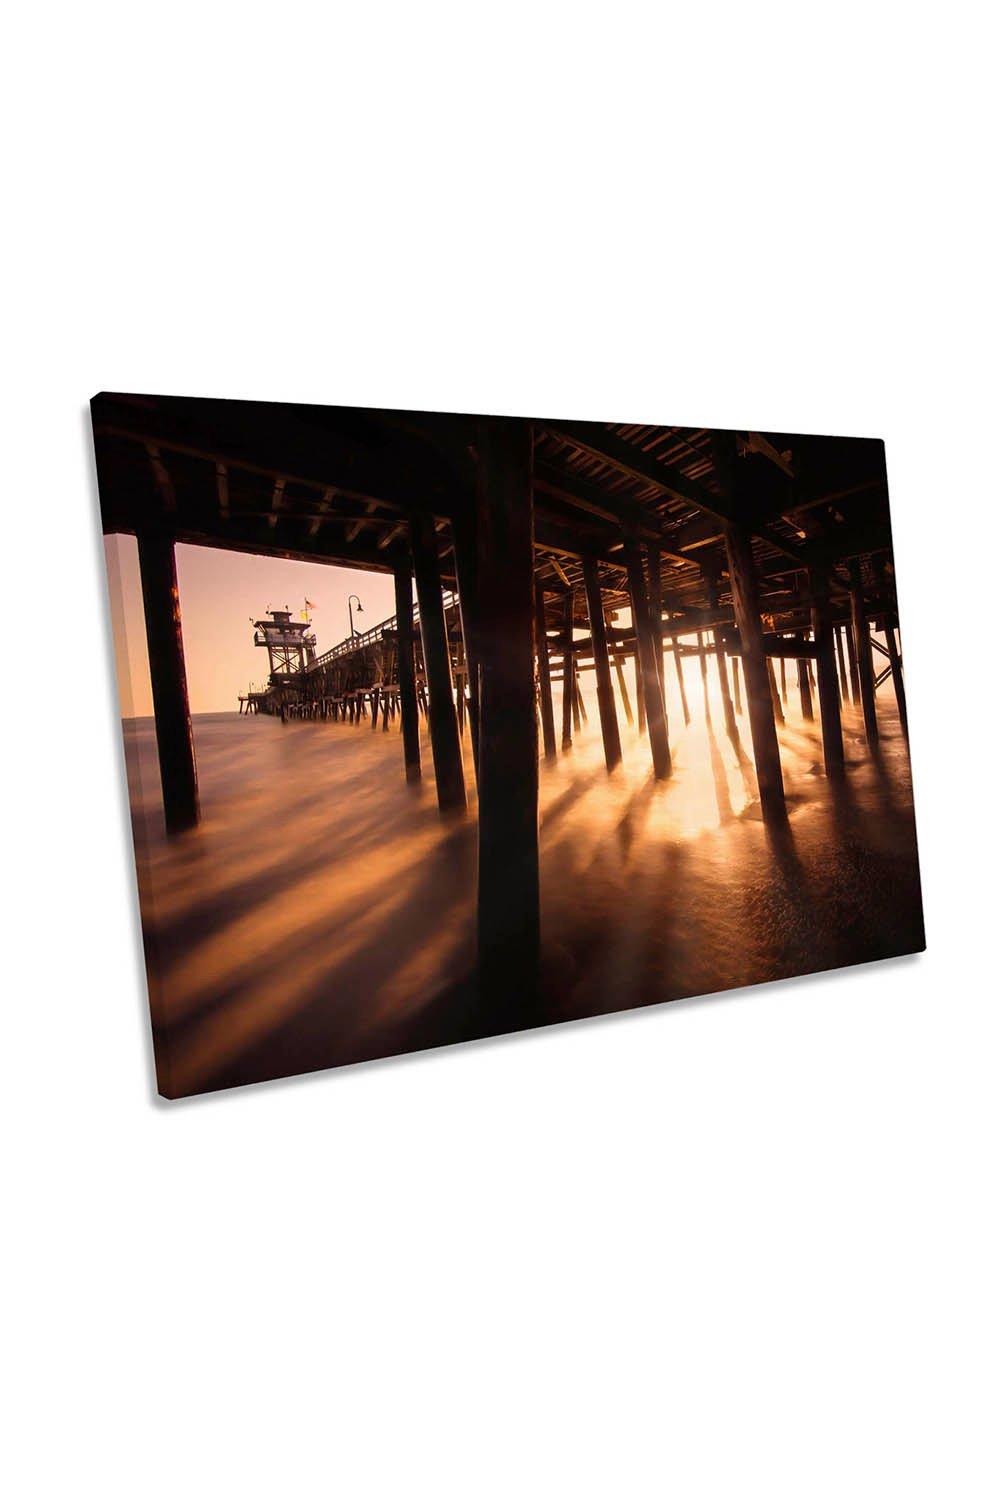 San Clemente California Beach Pier Sunlight Canvas Wall Art Picture Print